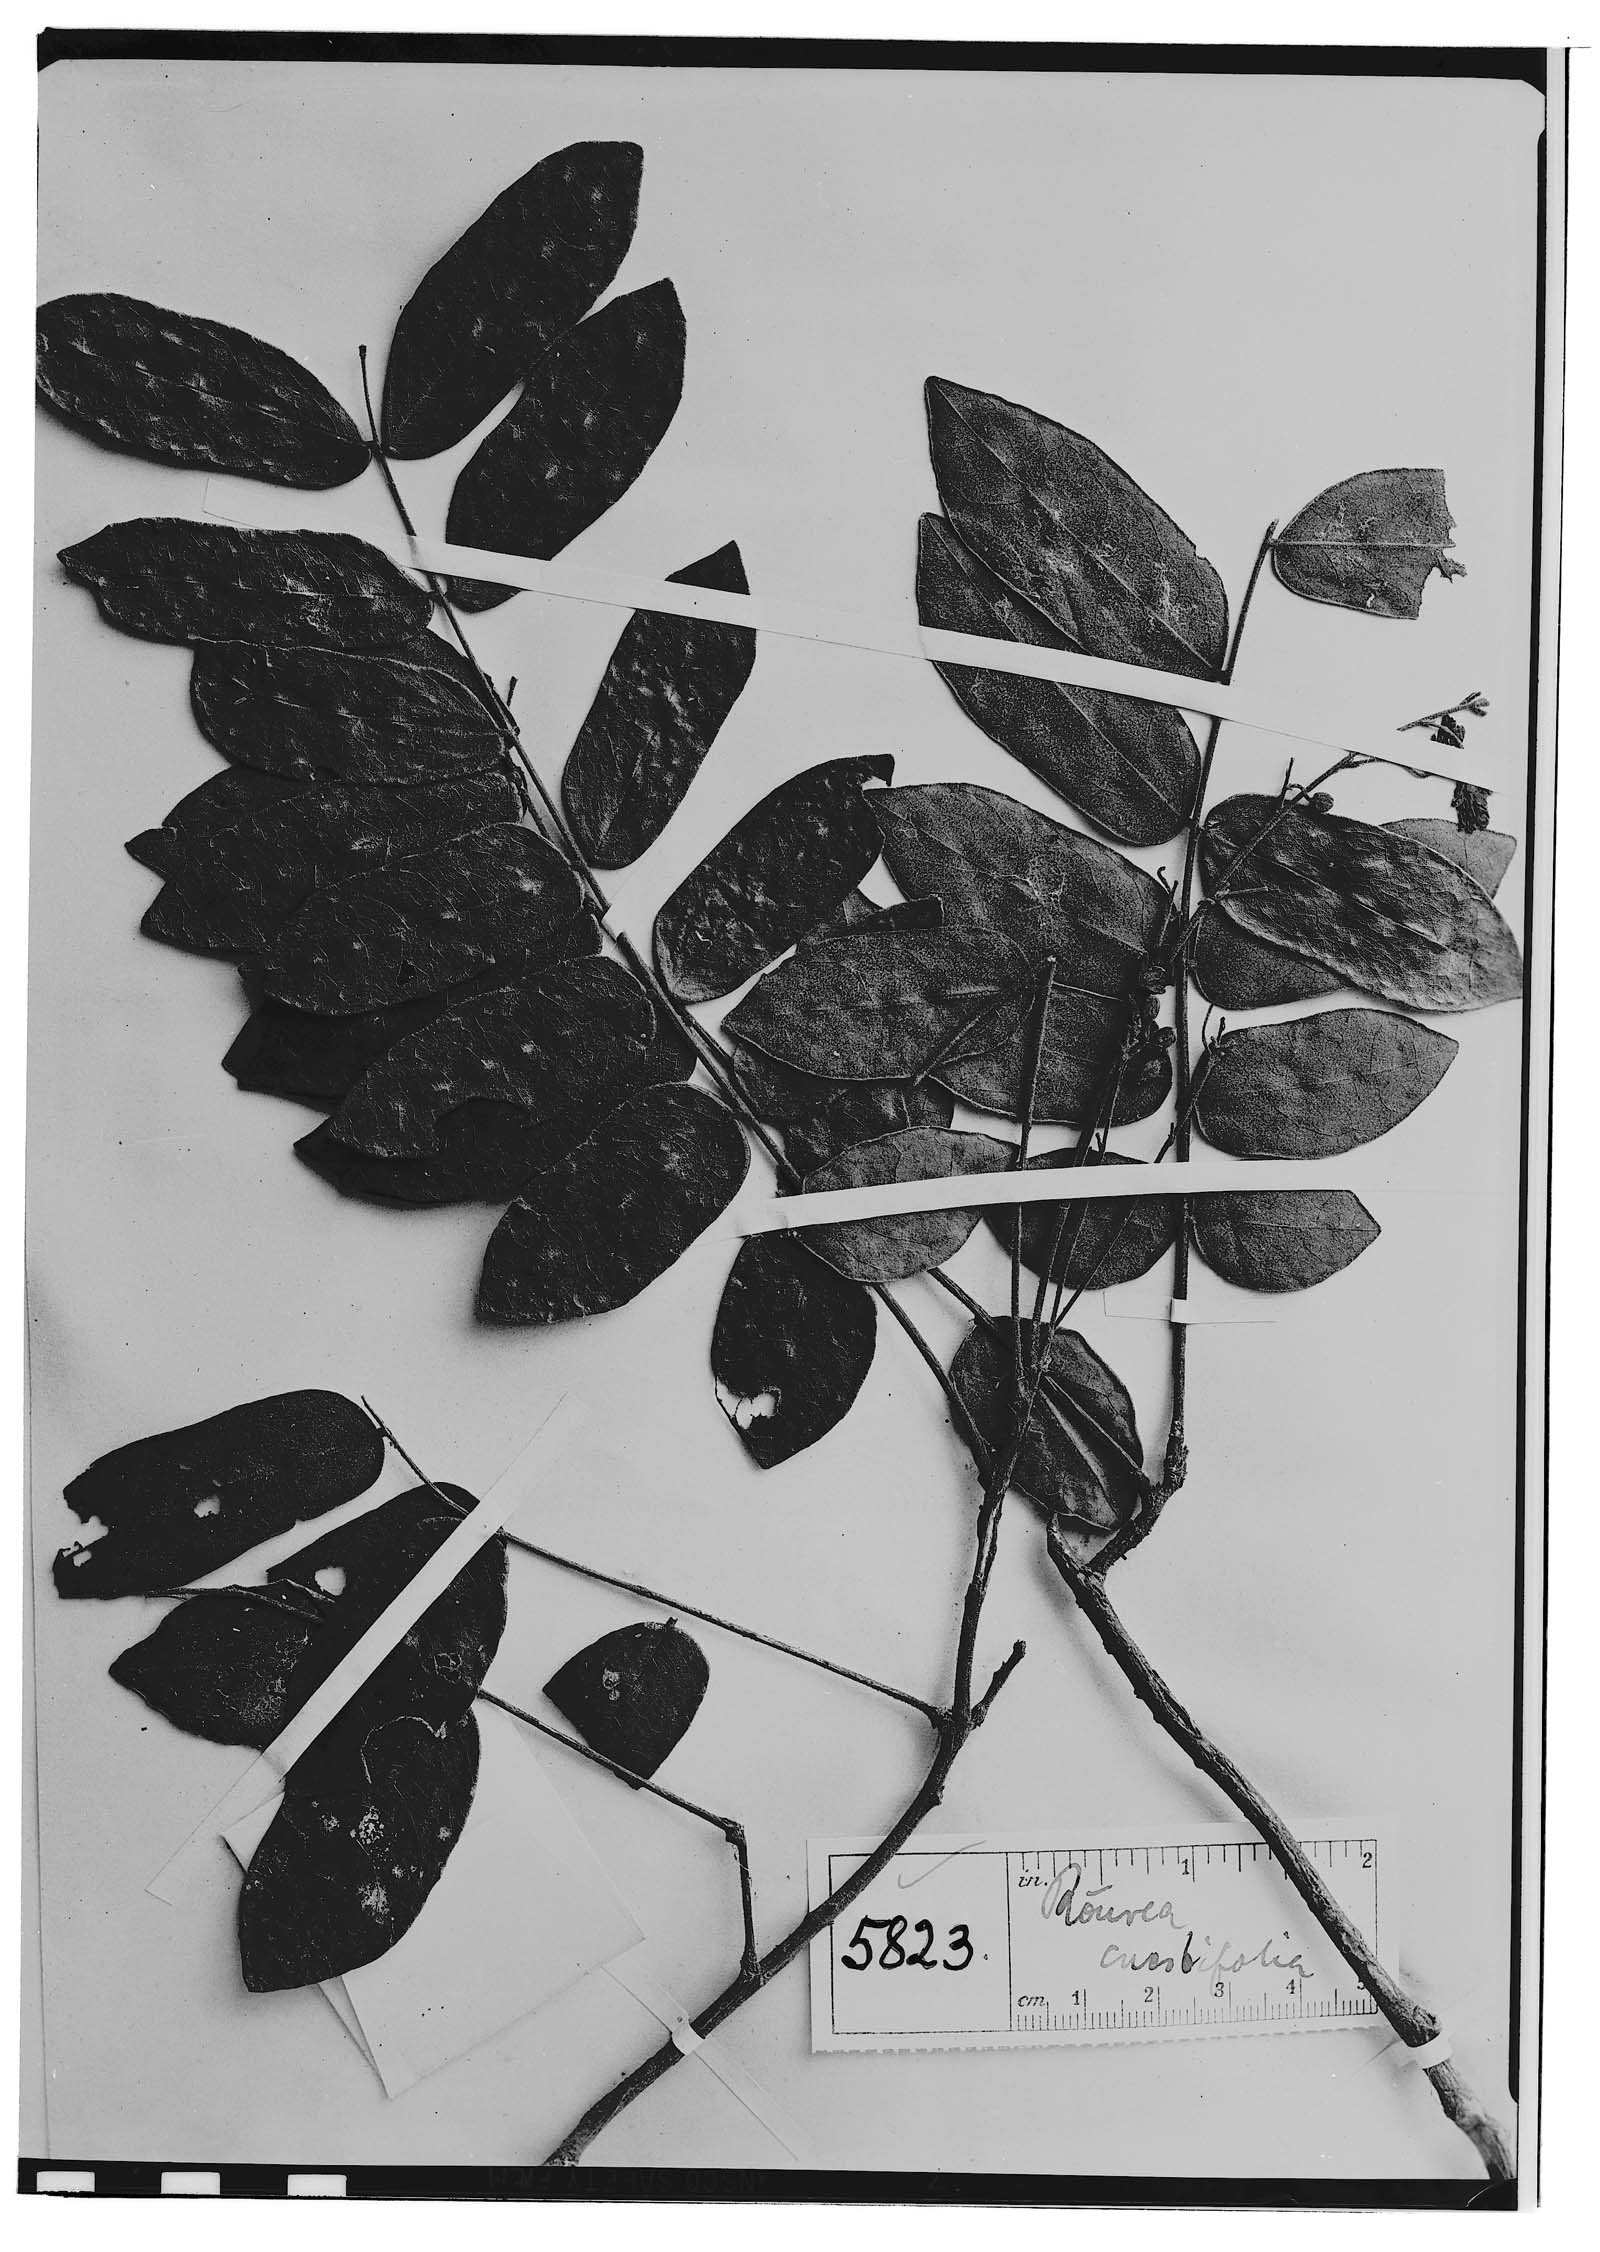 Rourea cnestidifolia image